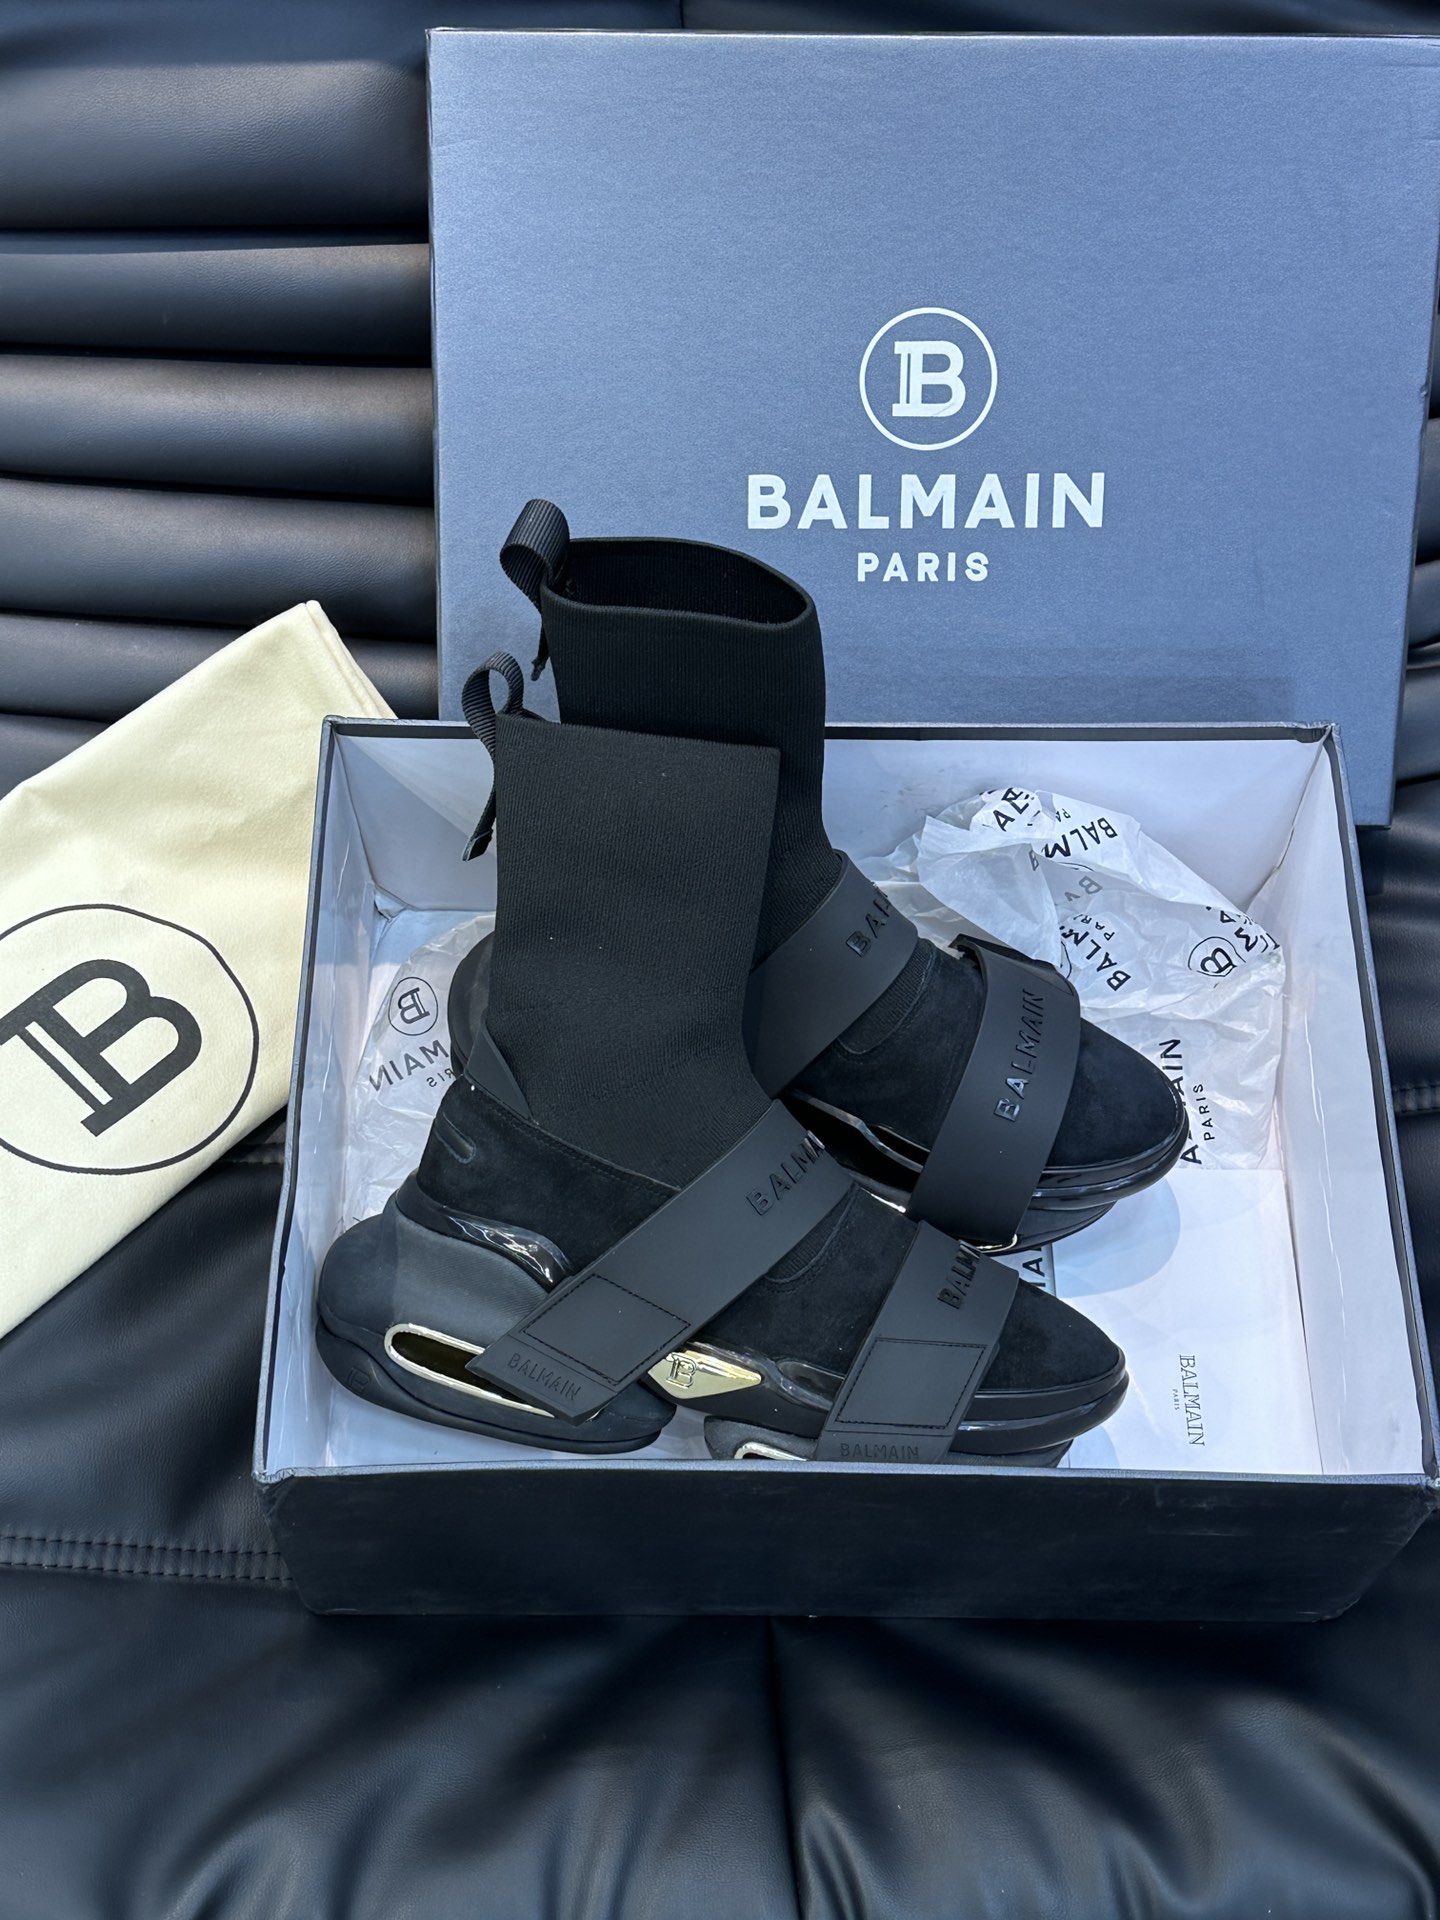 BALMAIN巴尔曼超酷情侣款太空鞋高磅袜子鞋造型太帅了增高8CM妥妥的气场全开！设计师以神话的生物独角